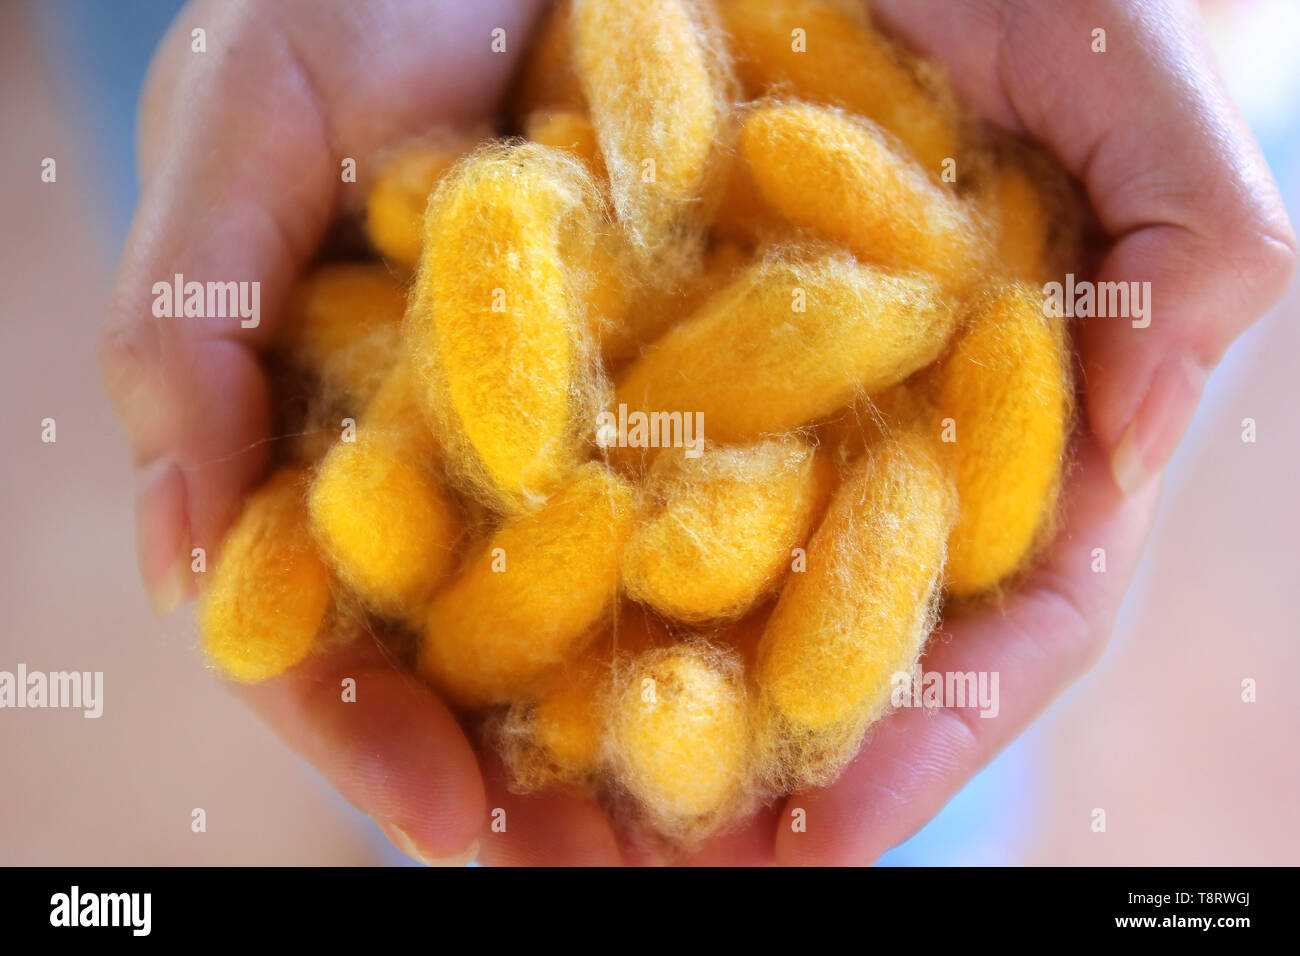 chrysalis yellow silkworm cocoons in woman hands Stock Photo